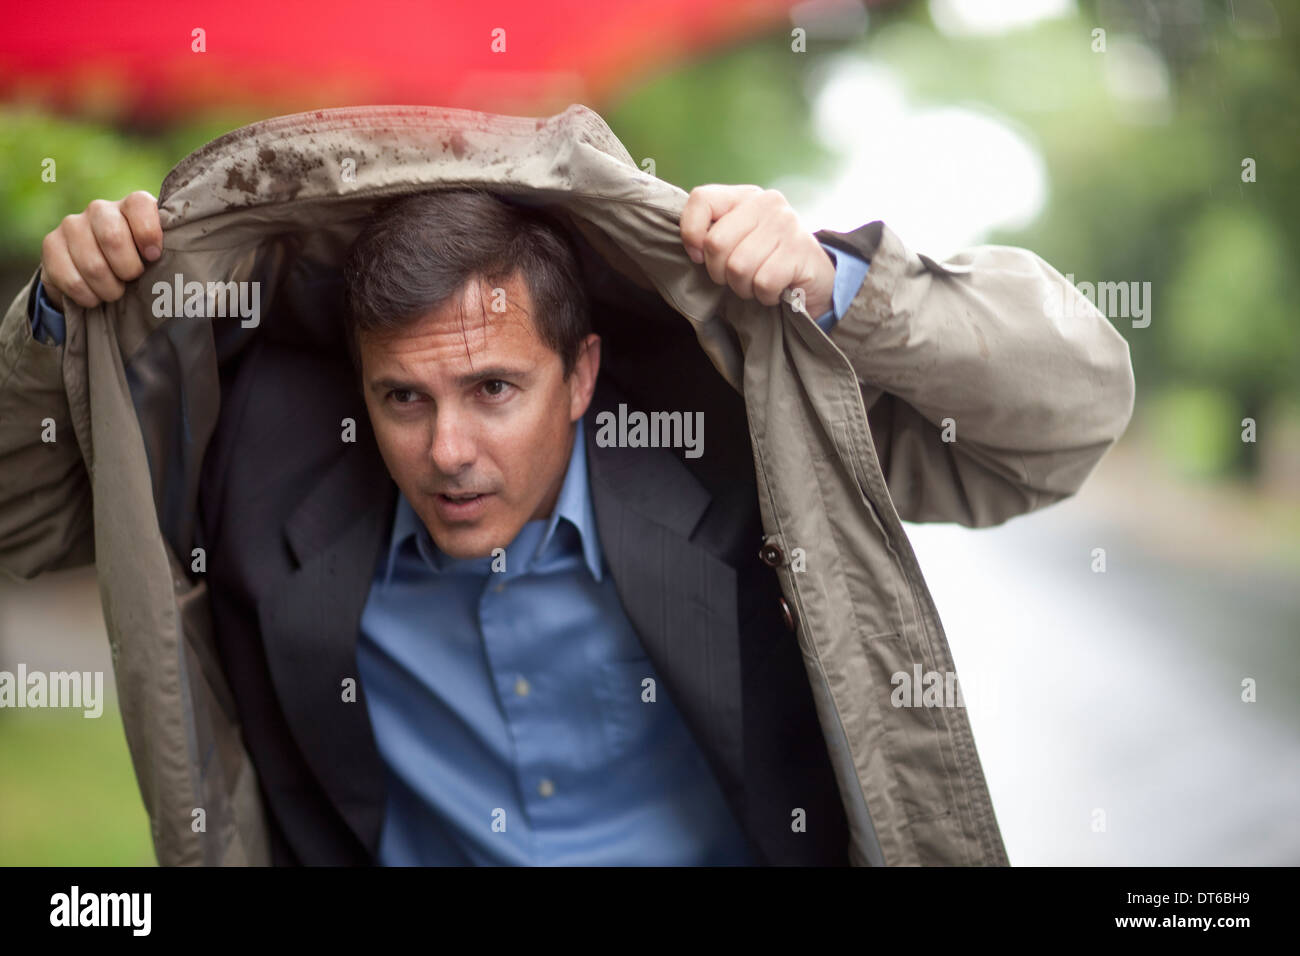 Businessman holding up raincoat to shelter from rain Stock Photo